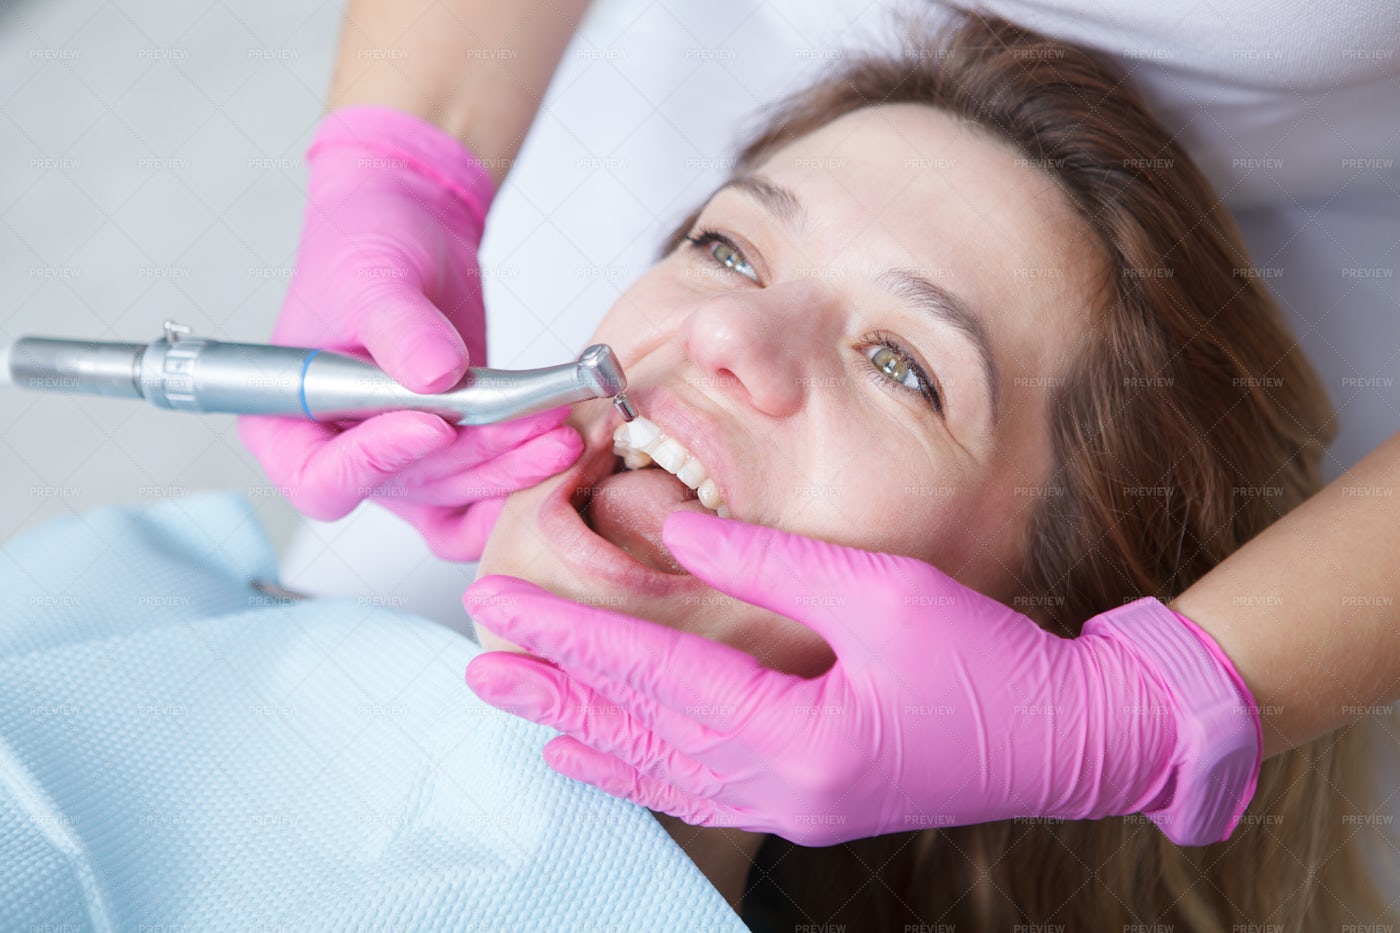 Teeth Cleaning Procedure: Stock Photos